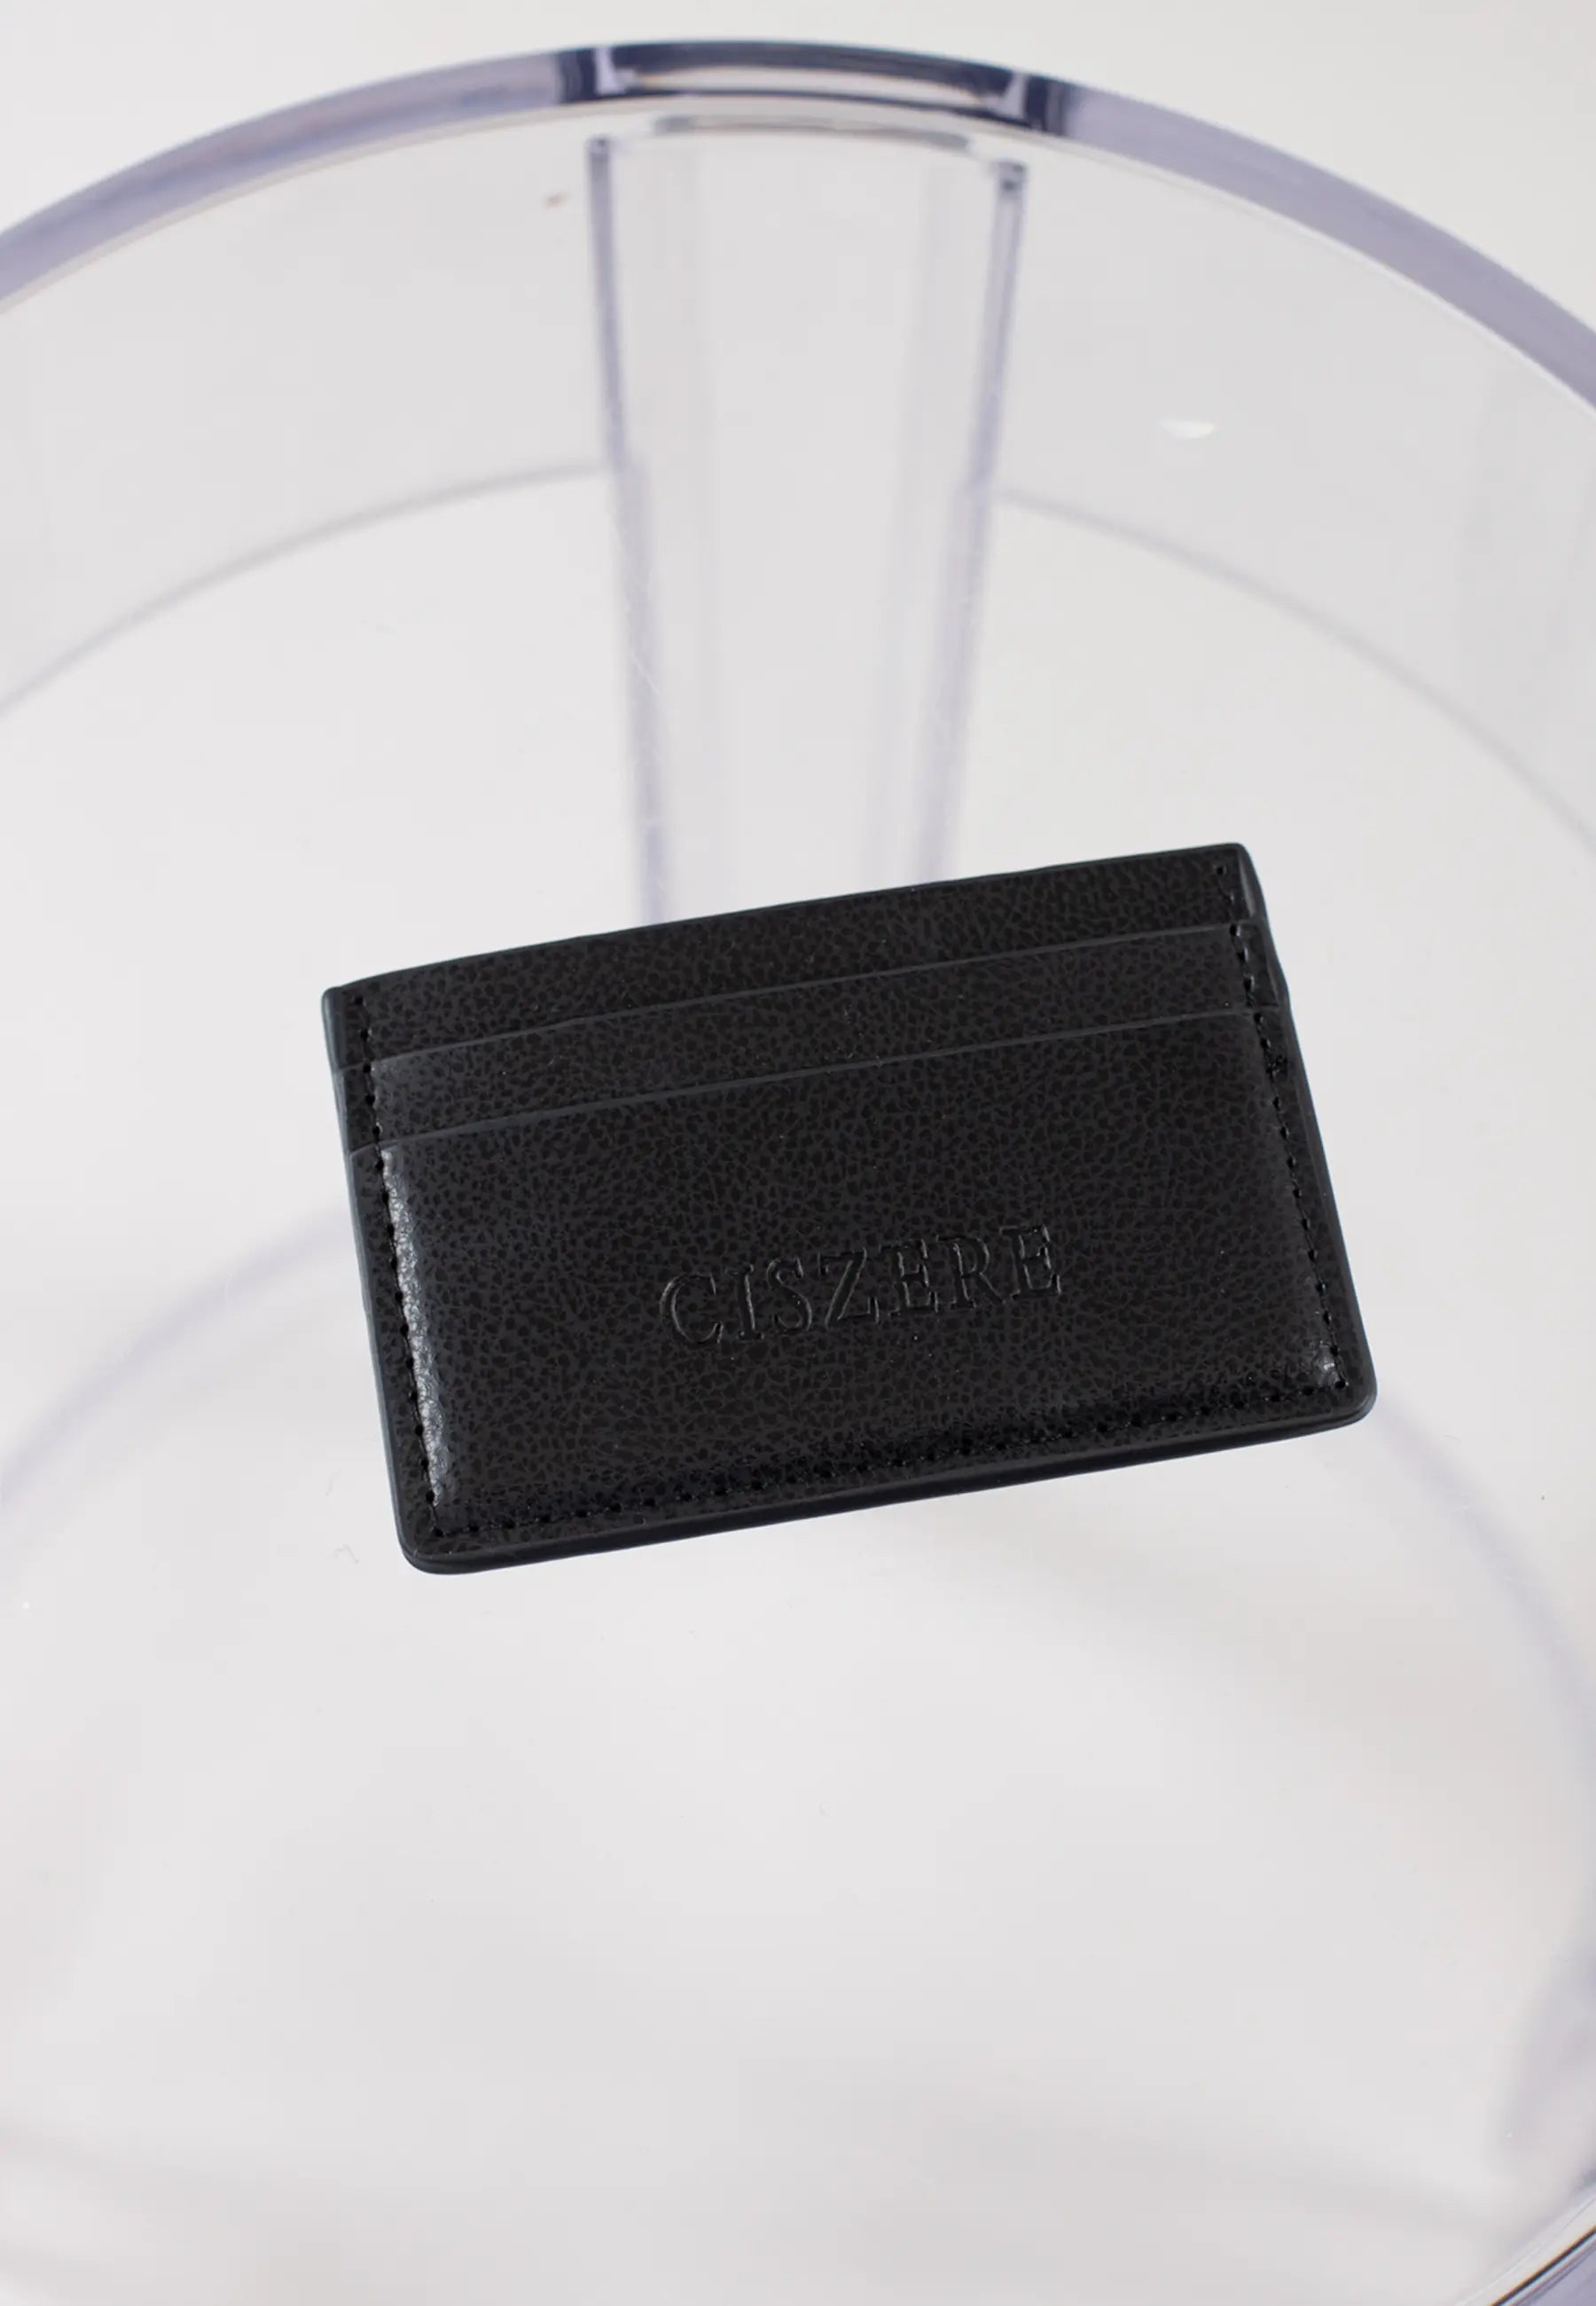 Carl vegan leather card holder - Black